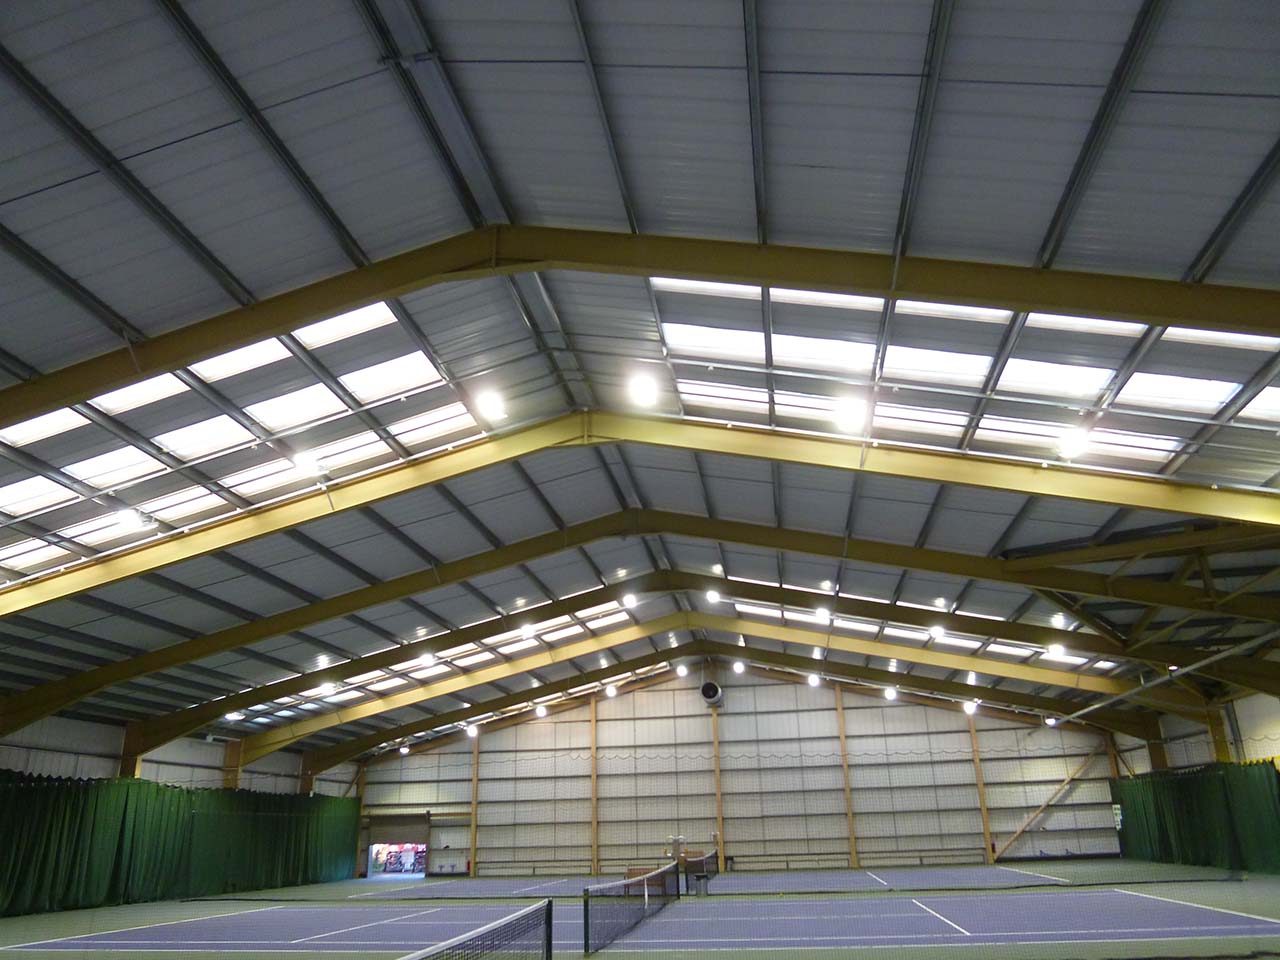 Windsor Lawn Tennis Club - Indoor Tennis Centre